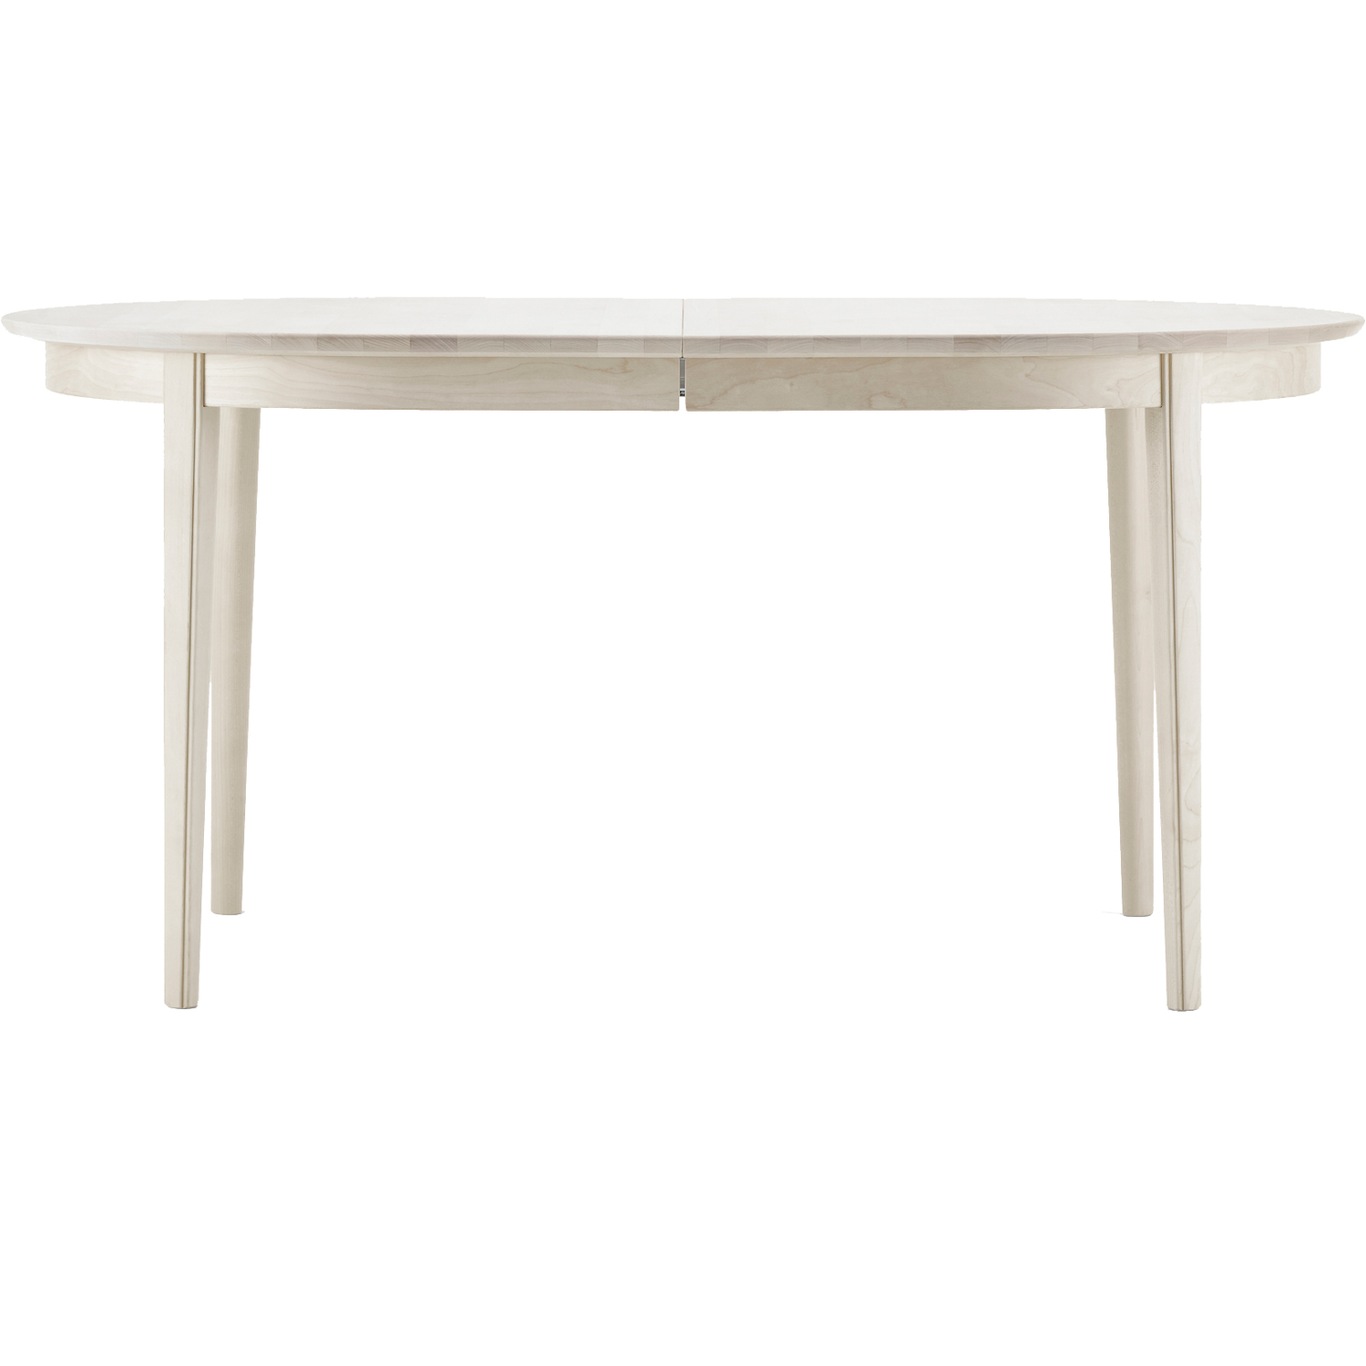 Vardags Spisebord Birk 100x160-210 cm, 1 Tillægsplade